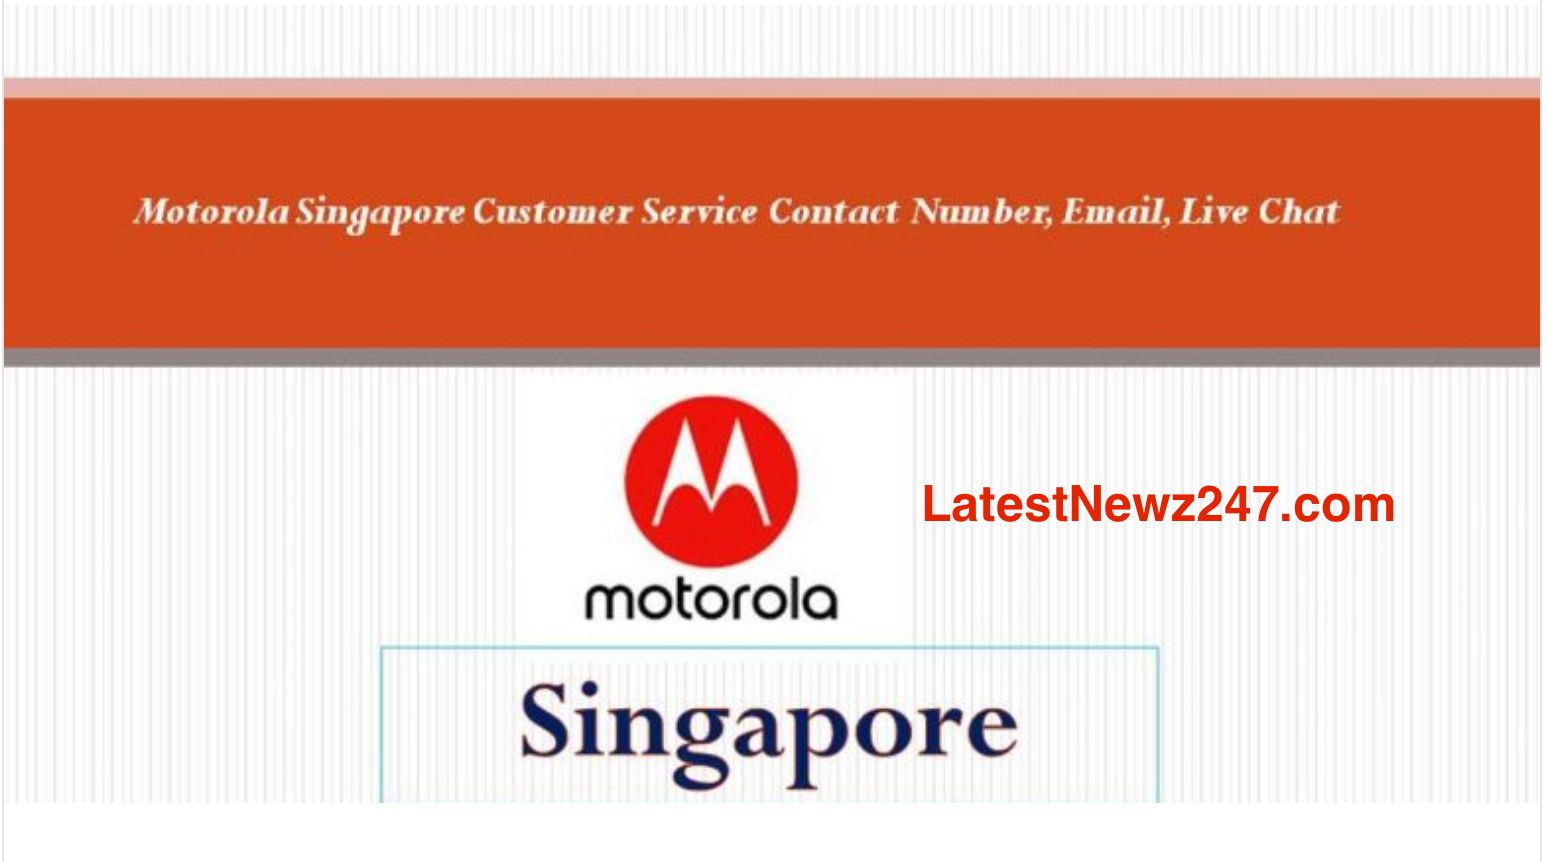 Motorola Singapore Customer Service Contact Number